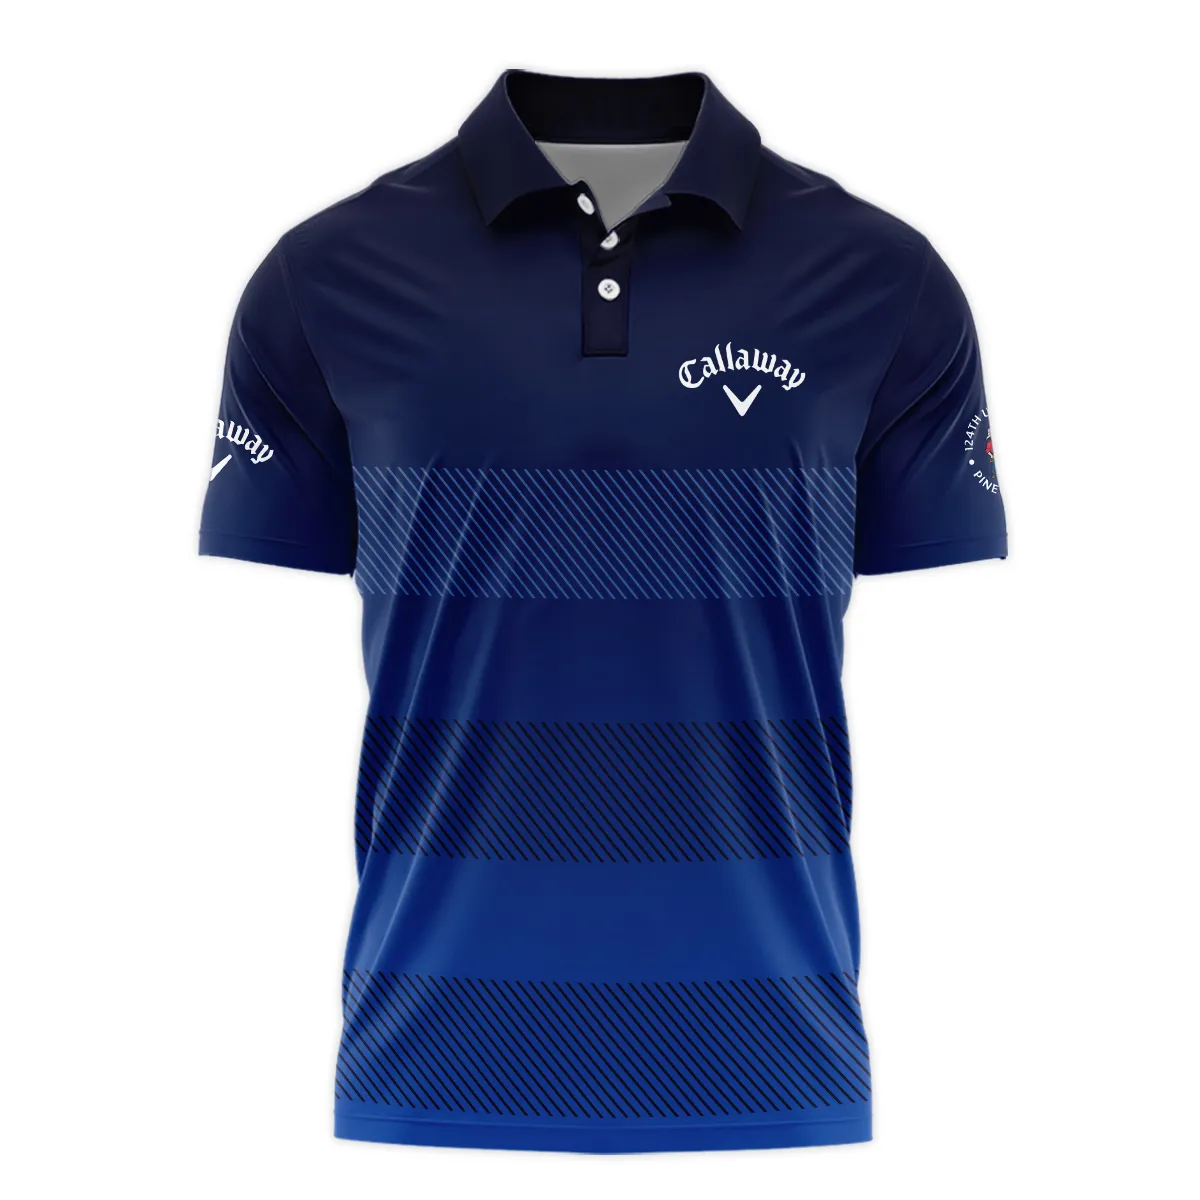 Callaway 124th U.S. Open Pinehurst Hoodie Shirt Sports Dark Blue Gradient Striped Pattern All Over Print Hoodie Shirt